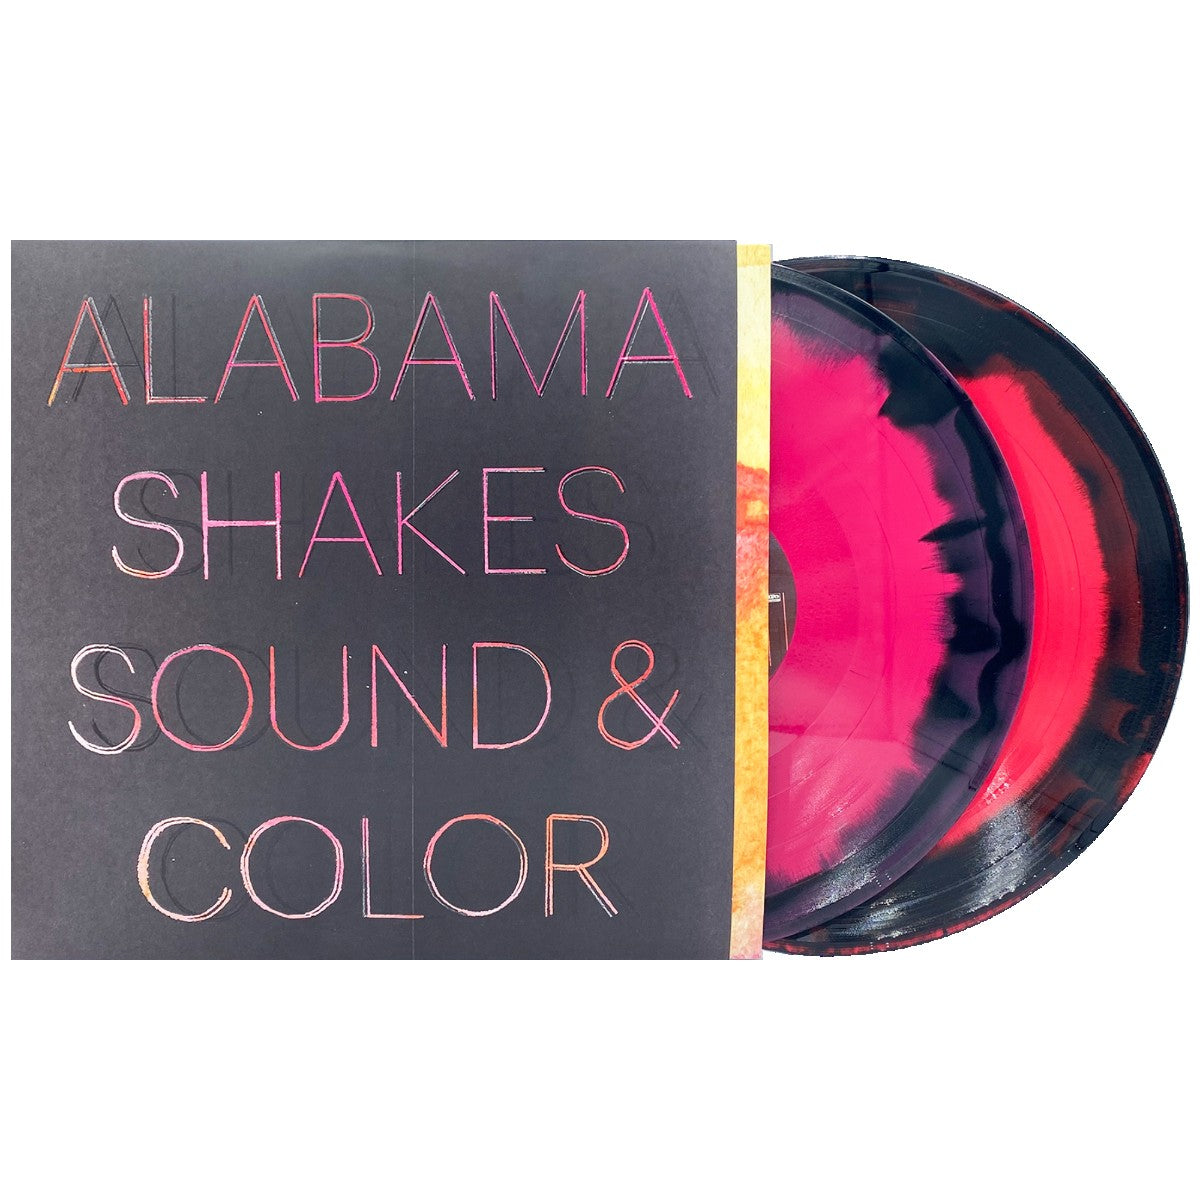 Alabama Shakes - Sound & Color (Deluxe Edition) [Colored Pink, Black, Magenta Vinyl 2LP]